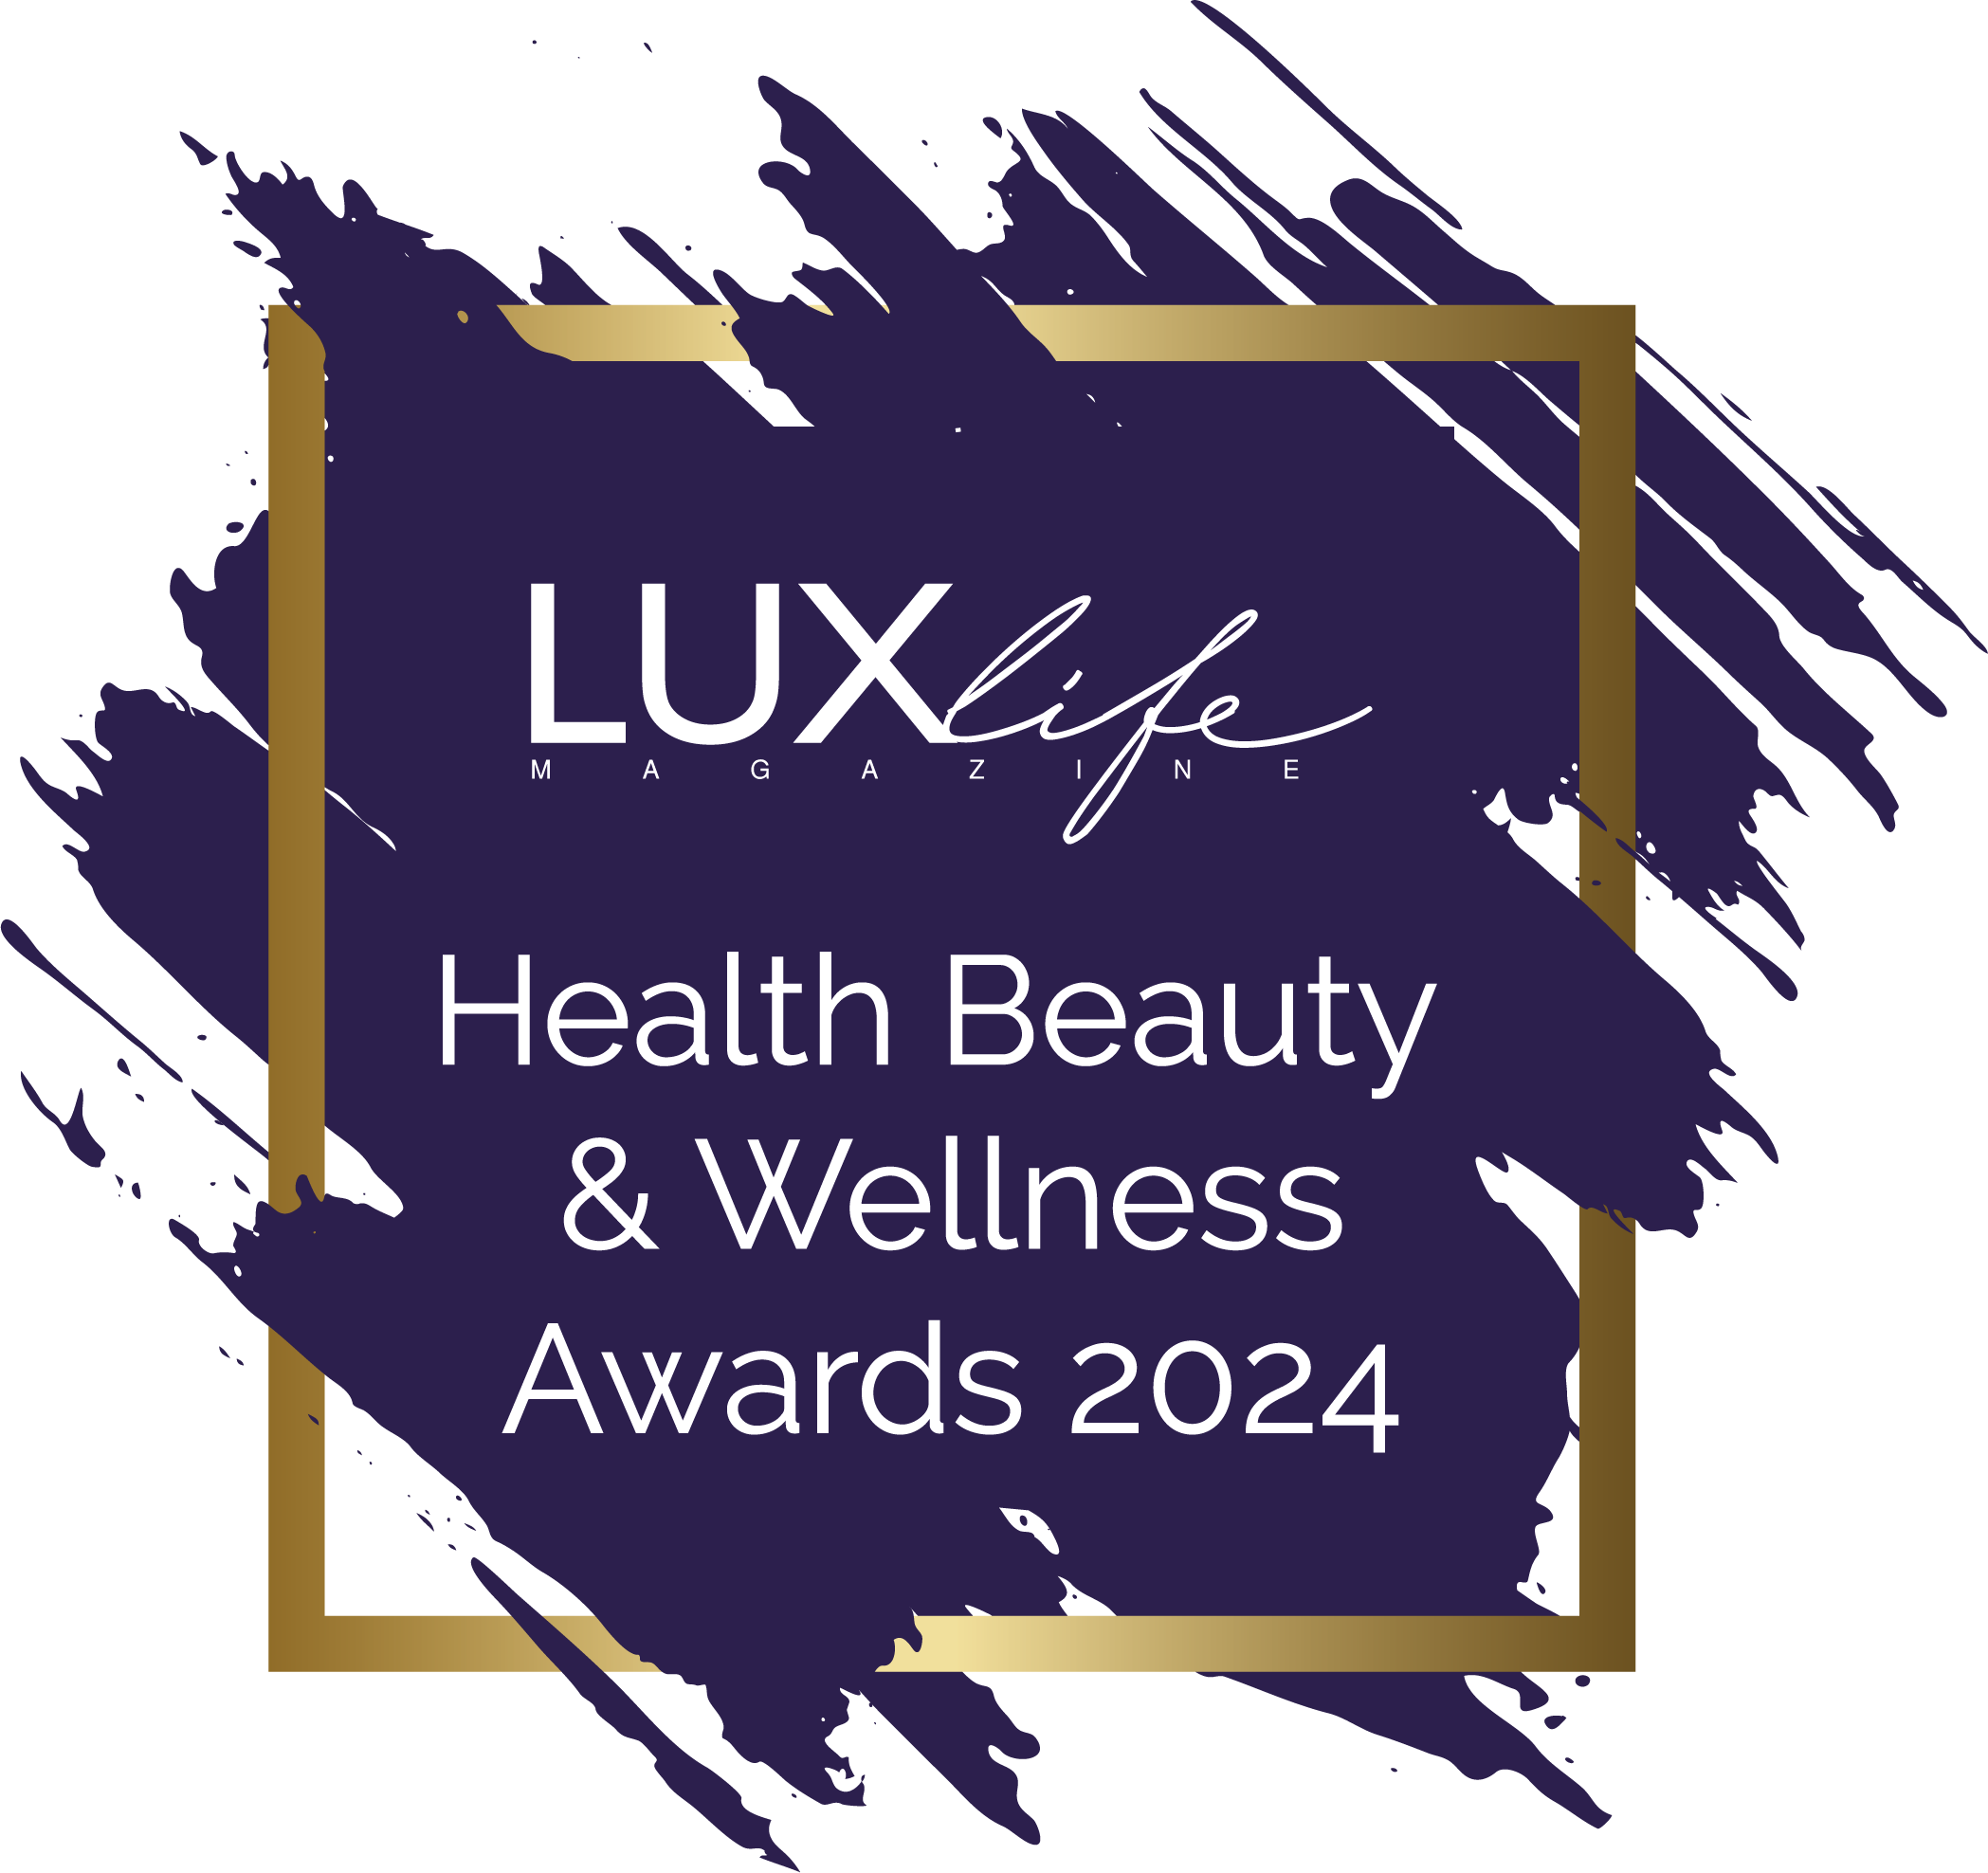 Health Beauty & Wellness Awards 2024 - Dr Apul Parikh